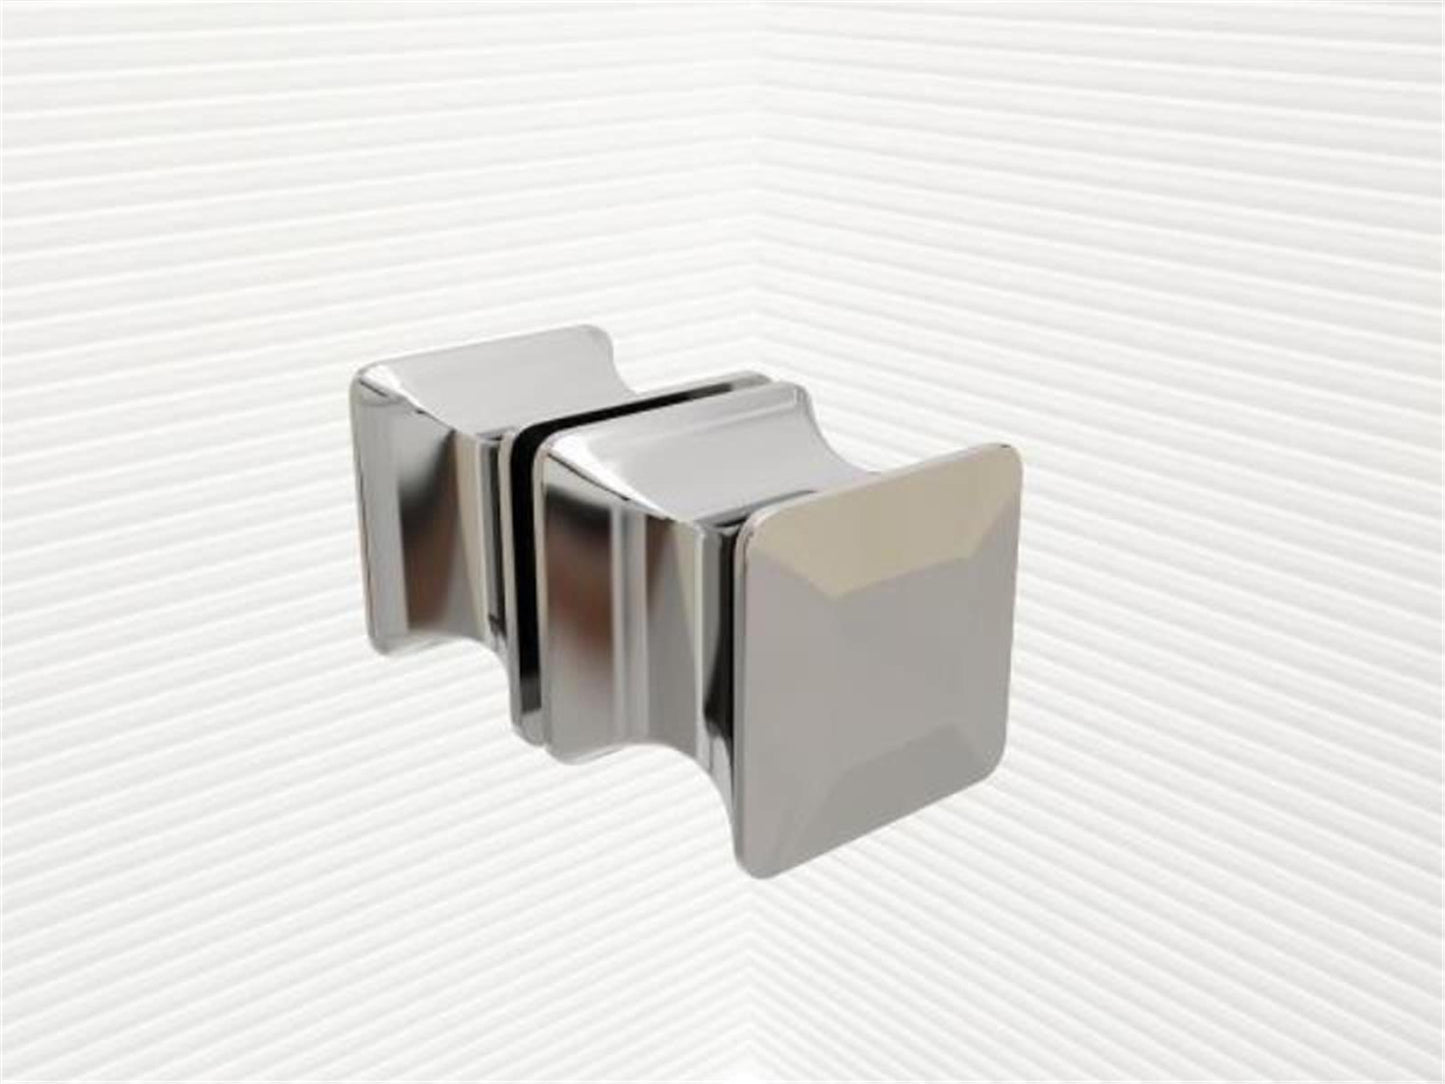 GlasHomeCenter - Box doccia a U "Asuka" (90x75x195cm) - 8mm - box doccia ad angolo - parete doccia - senza piatto doccia